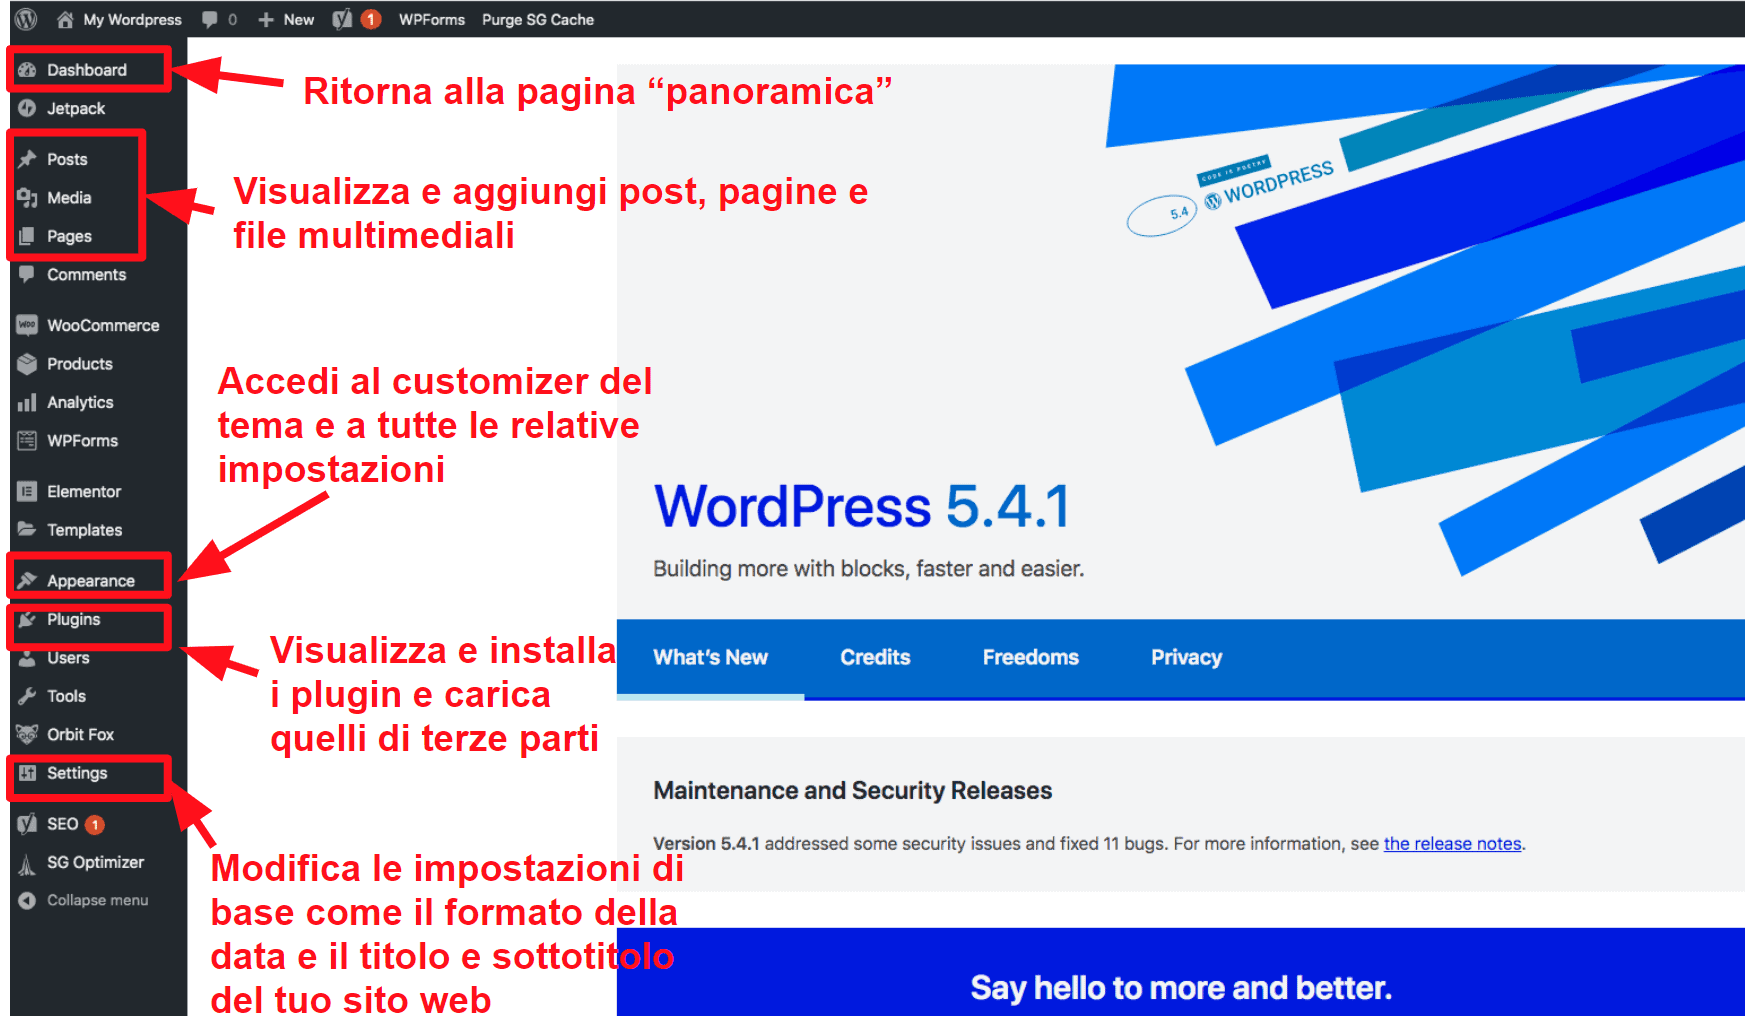 The WordPress dashboard IT16